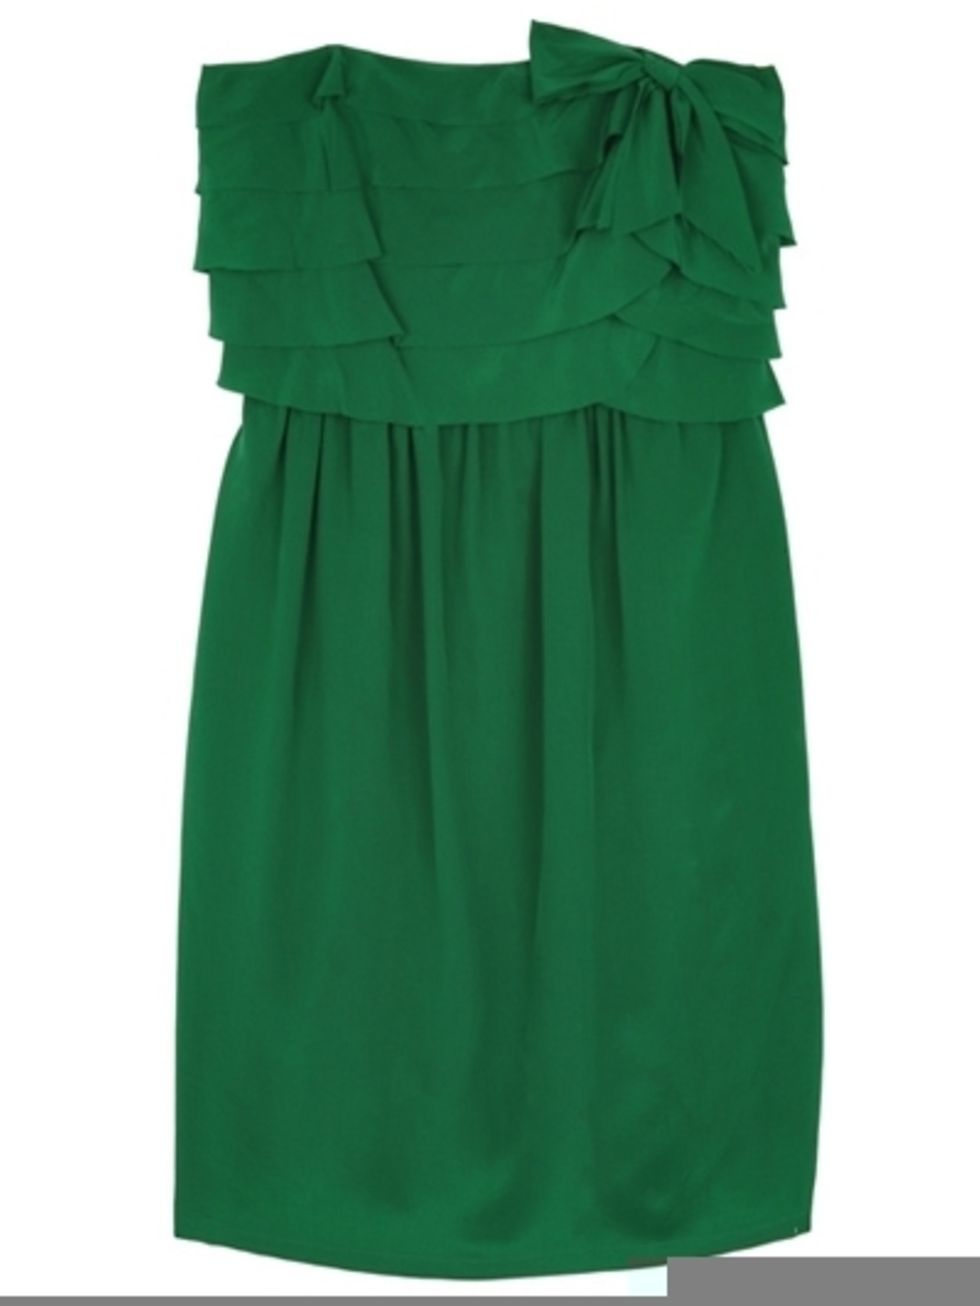 Green, Sleeve, Dress, Textile, One-piece garment, Pattern, Teal, Collar, Turquoise, Aqua, 